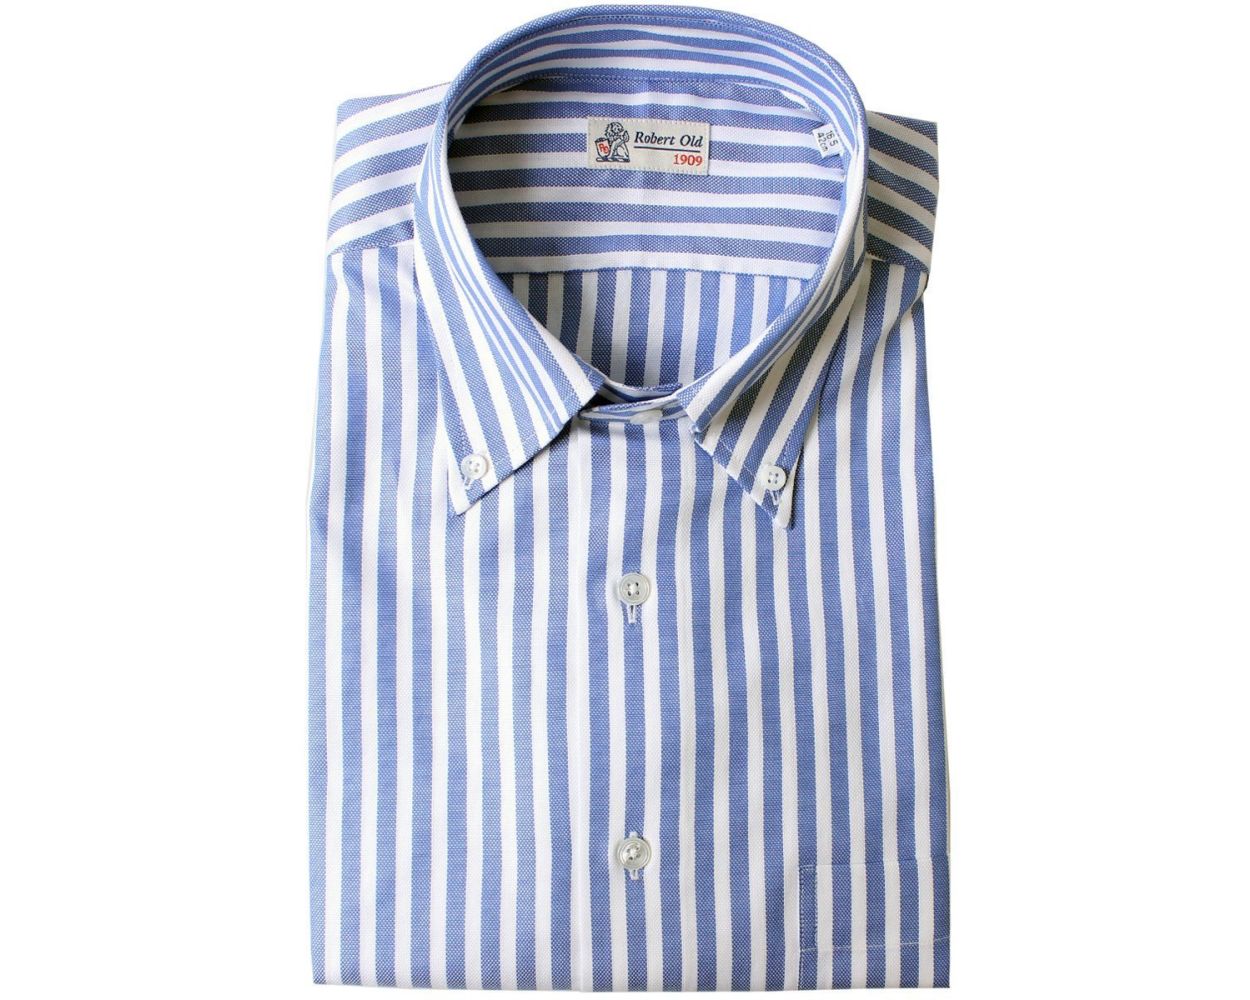 Premium Cotton Shirt - White/blue striped - Men